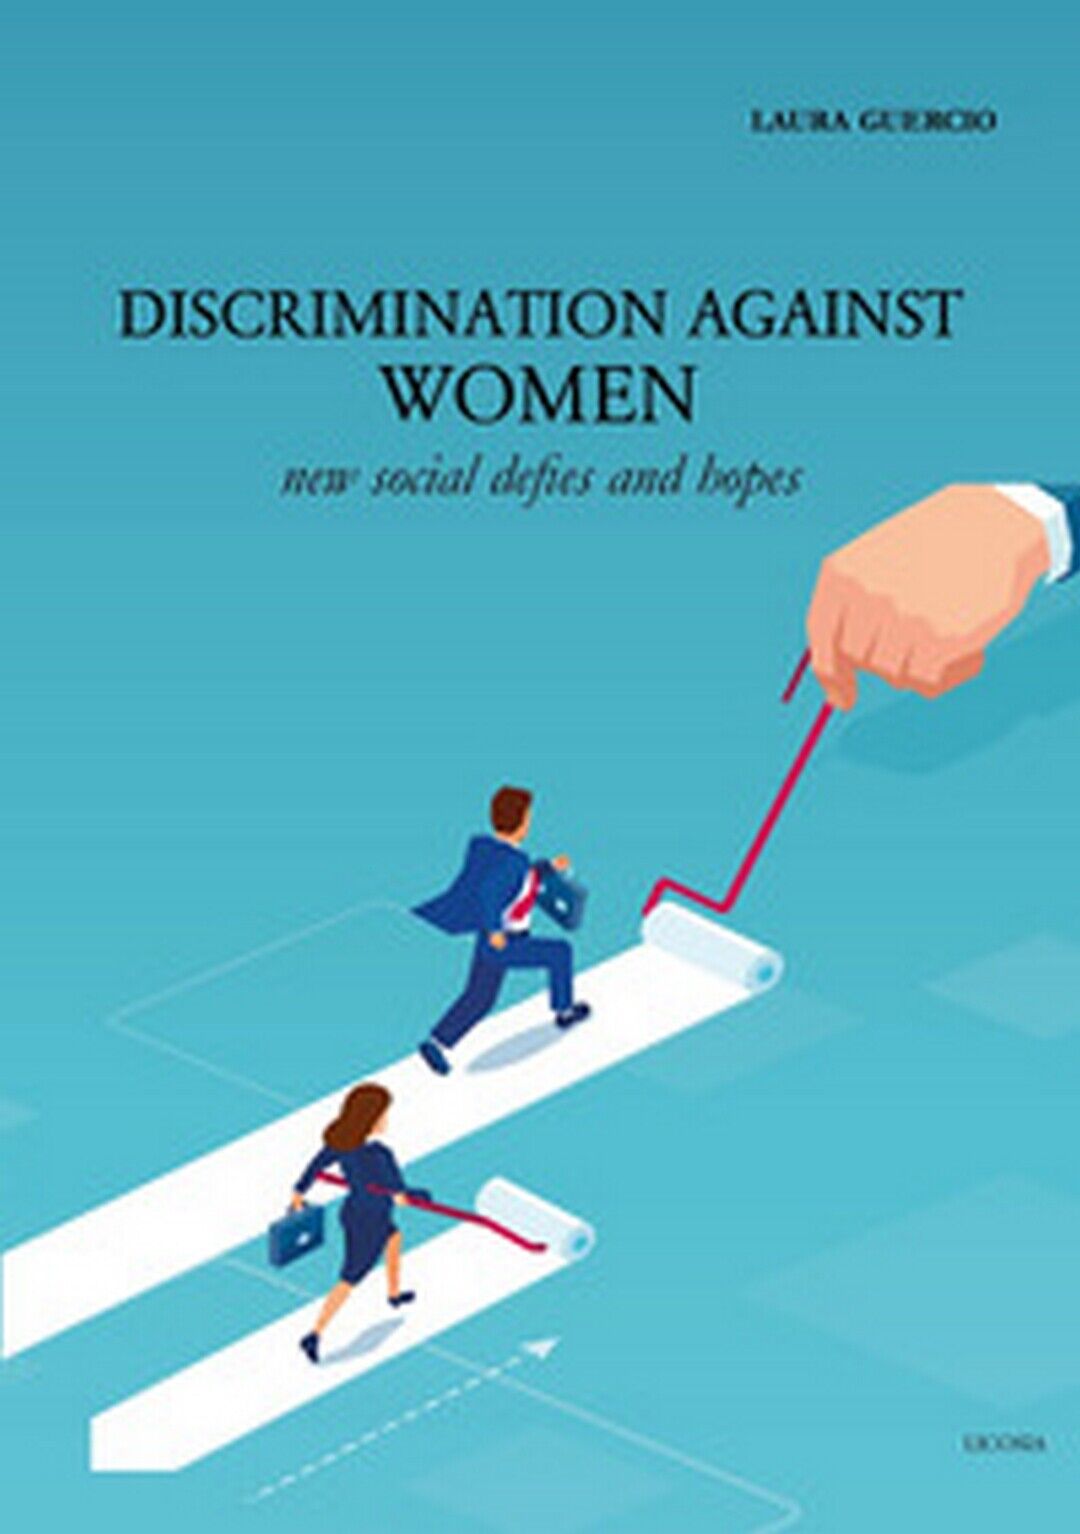 Discrimination against women. New social defies and hopes  di Laura Guercio,  20 libro usato